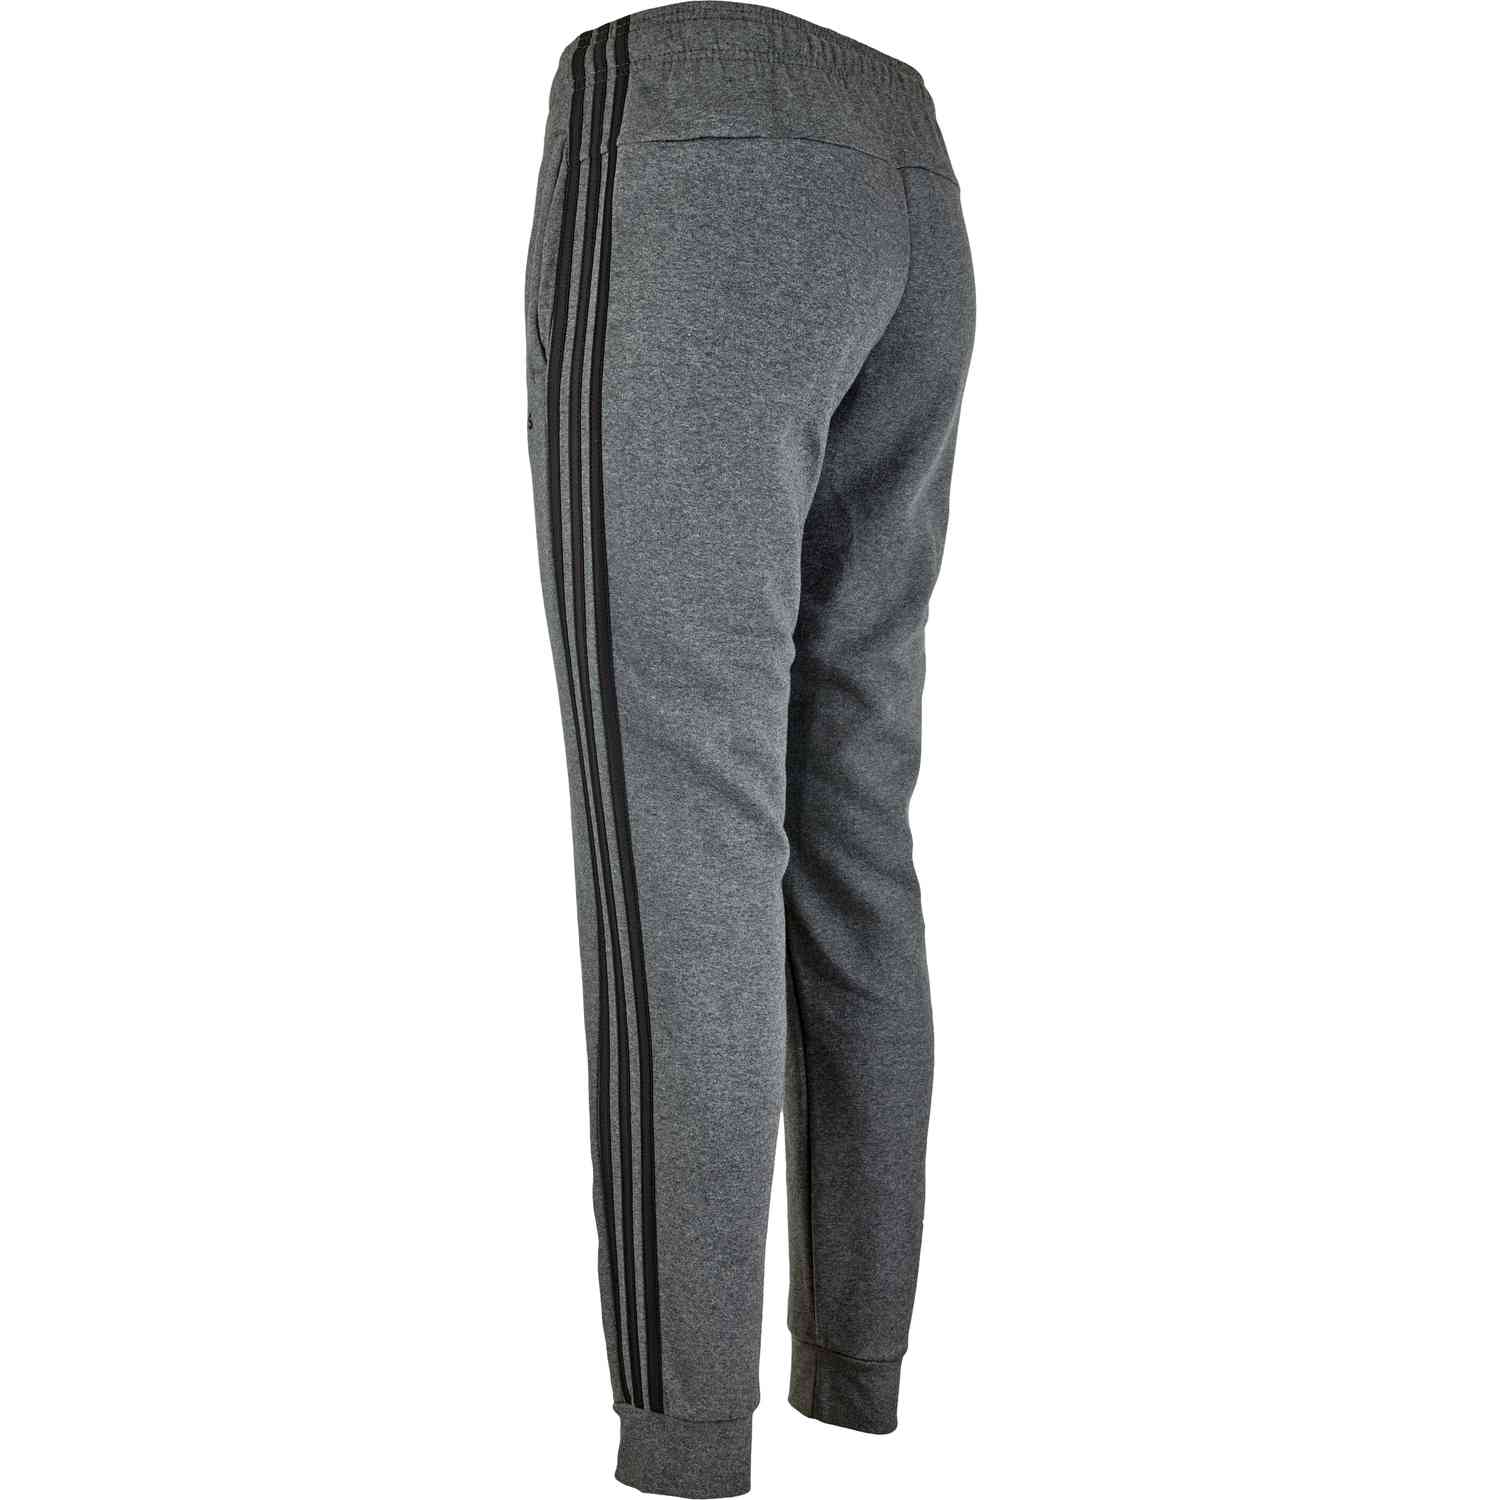 grey adidas pants with black stripes